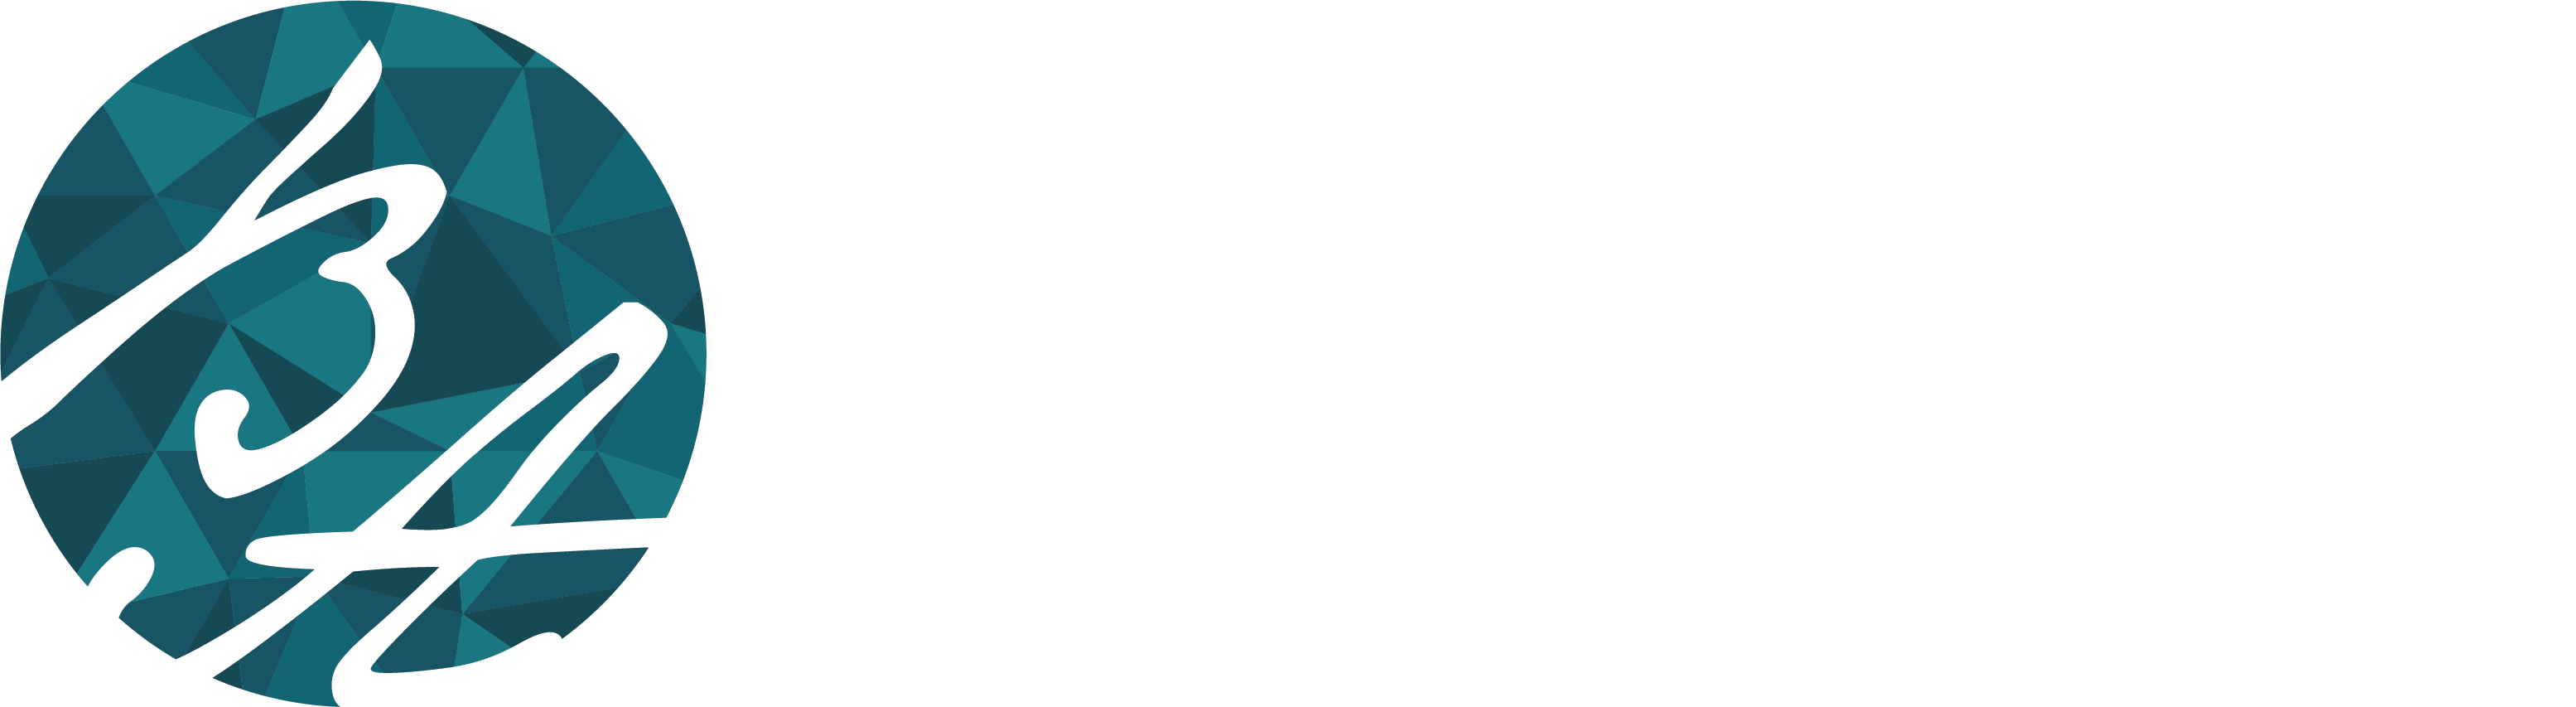 Buro Andersom logo